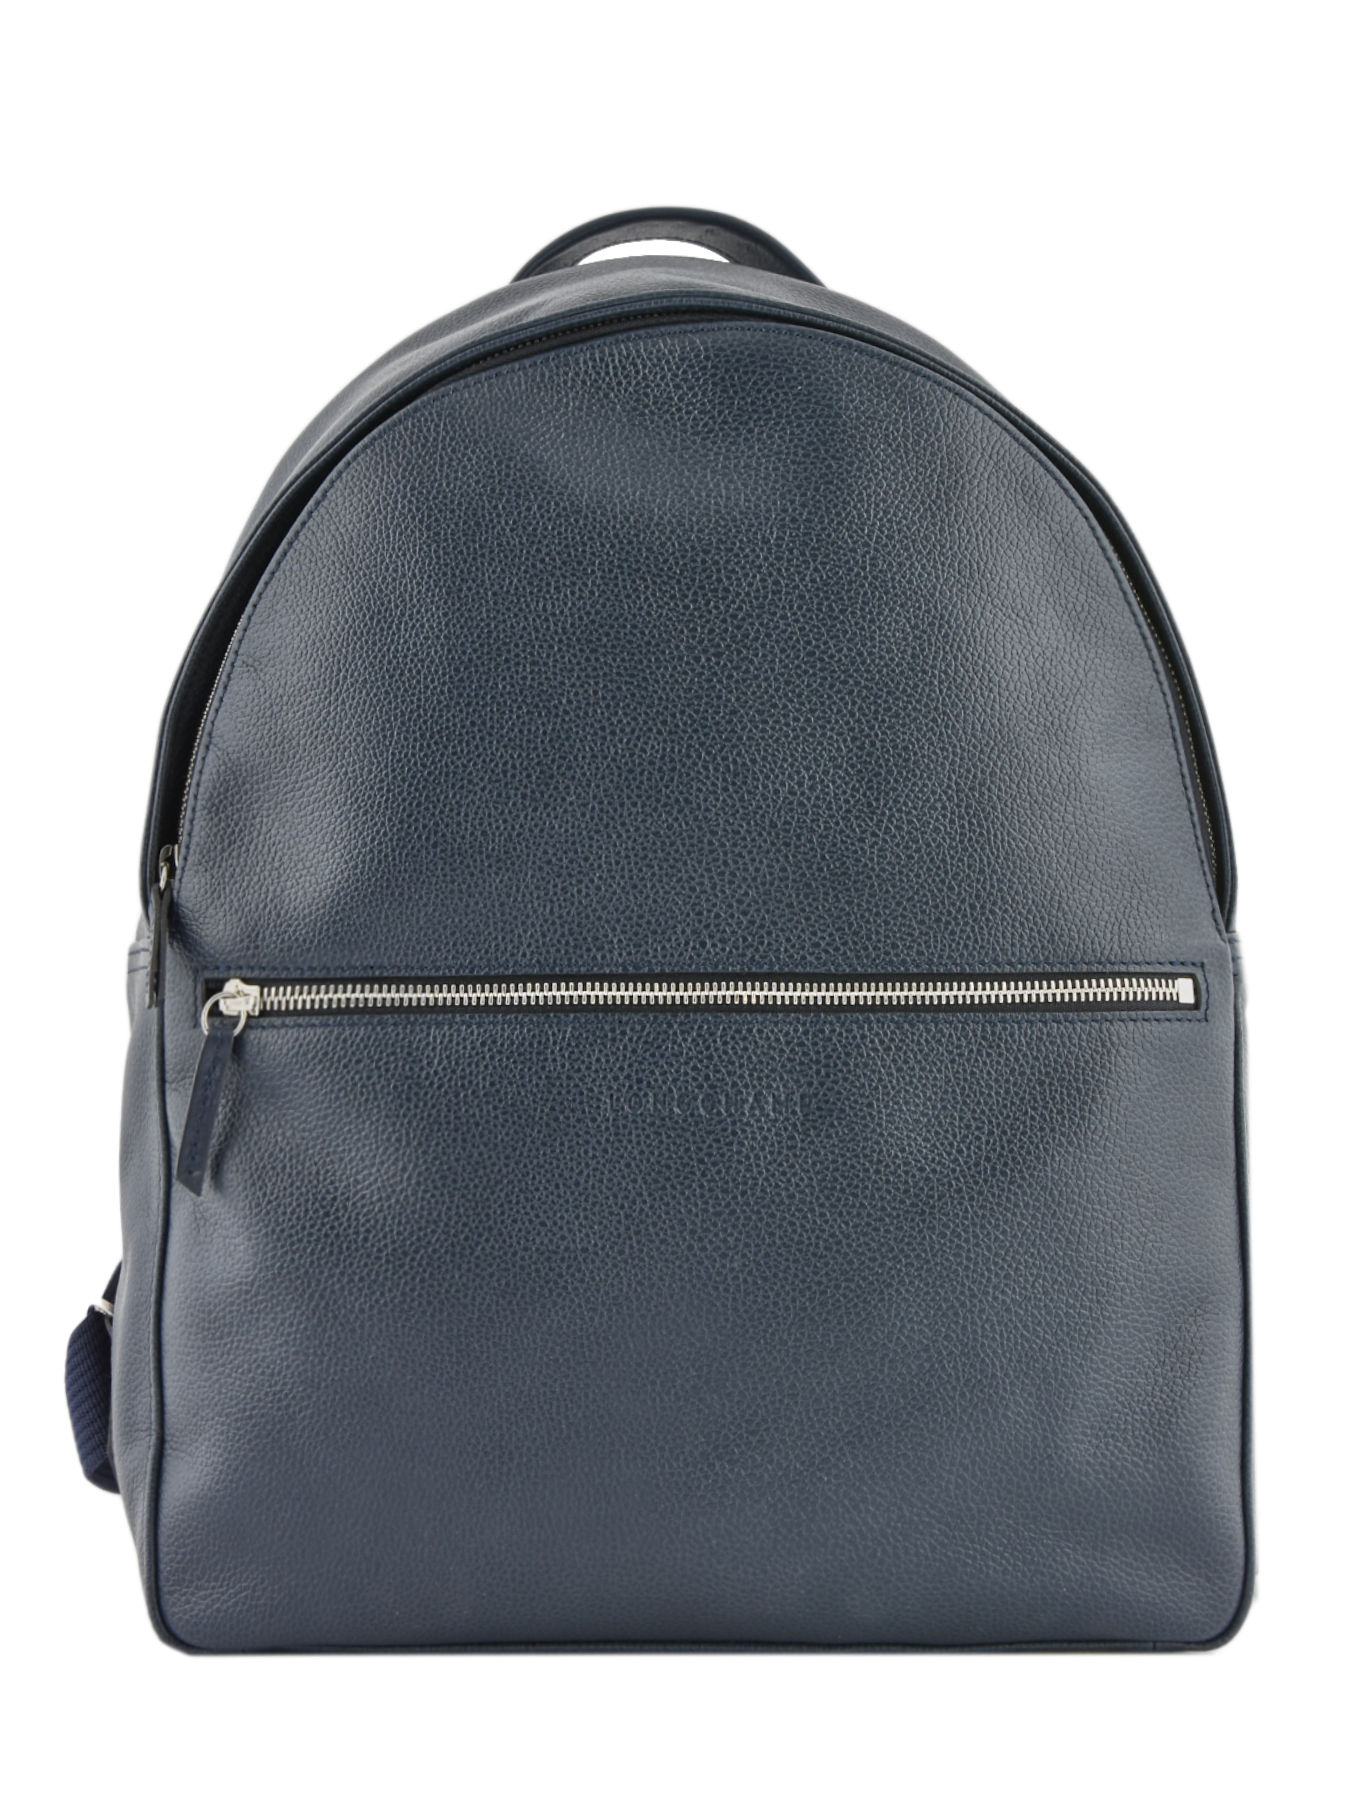 Longchamp Backpacks 20001021 - best prices